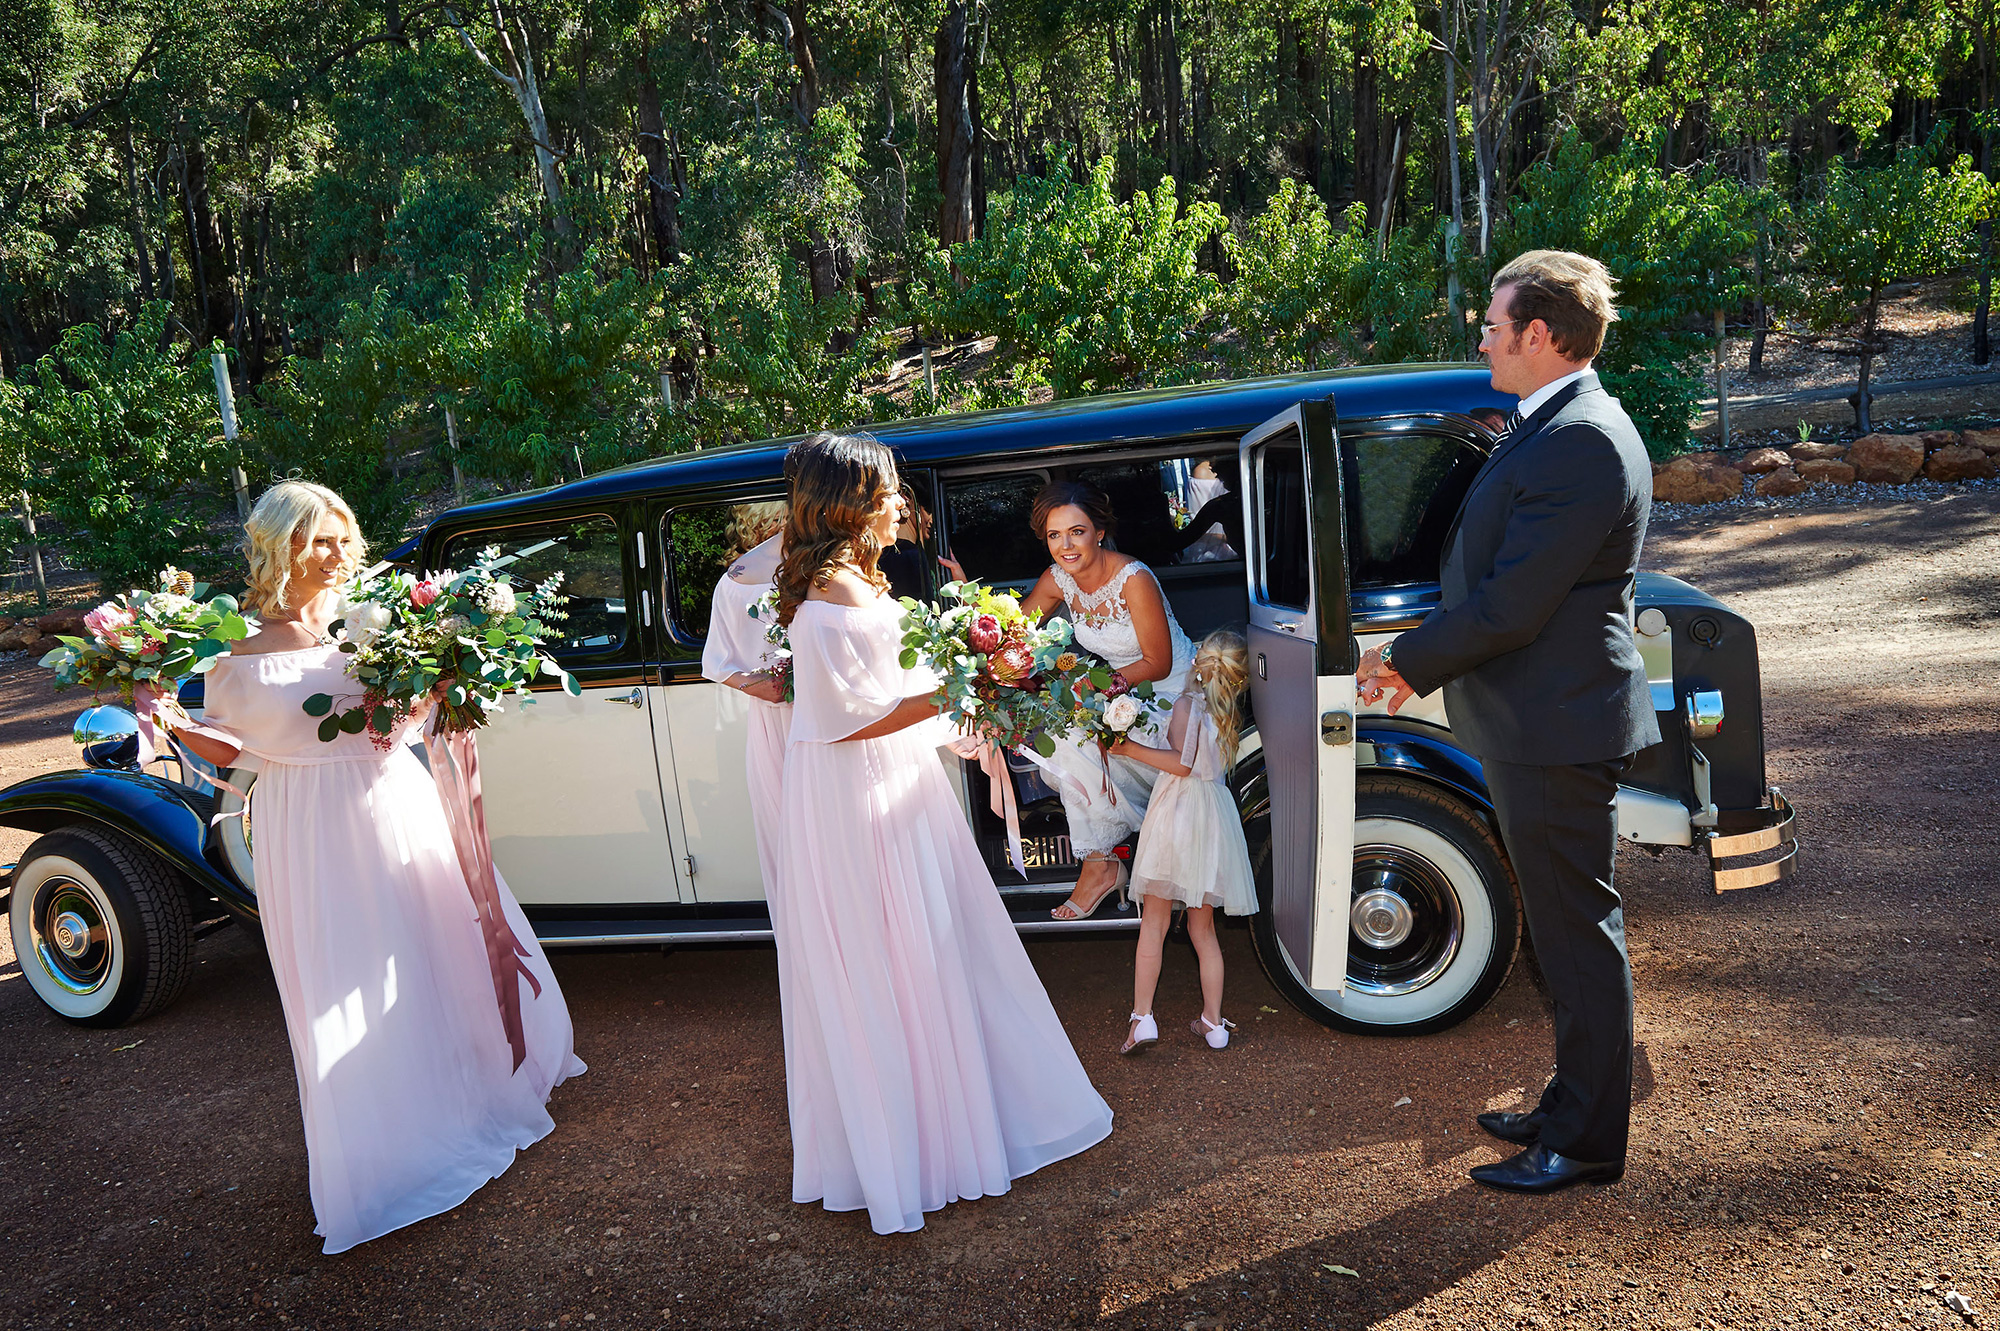 Adelaide_Ben_Rustic-Vineyard-Wedding_Peter-Edwards-Photography_013